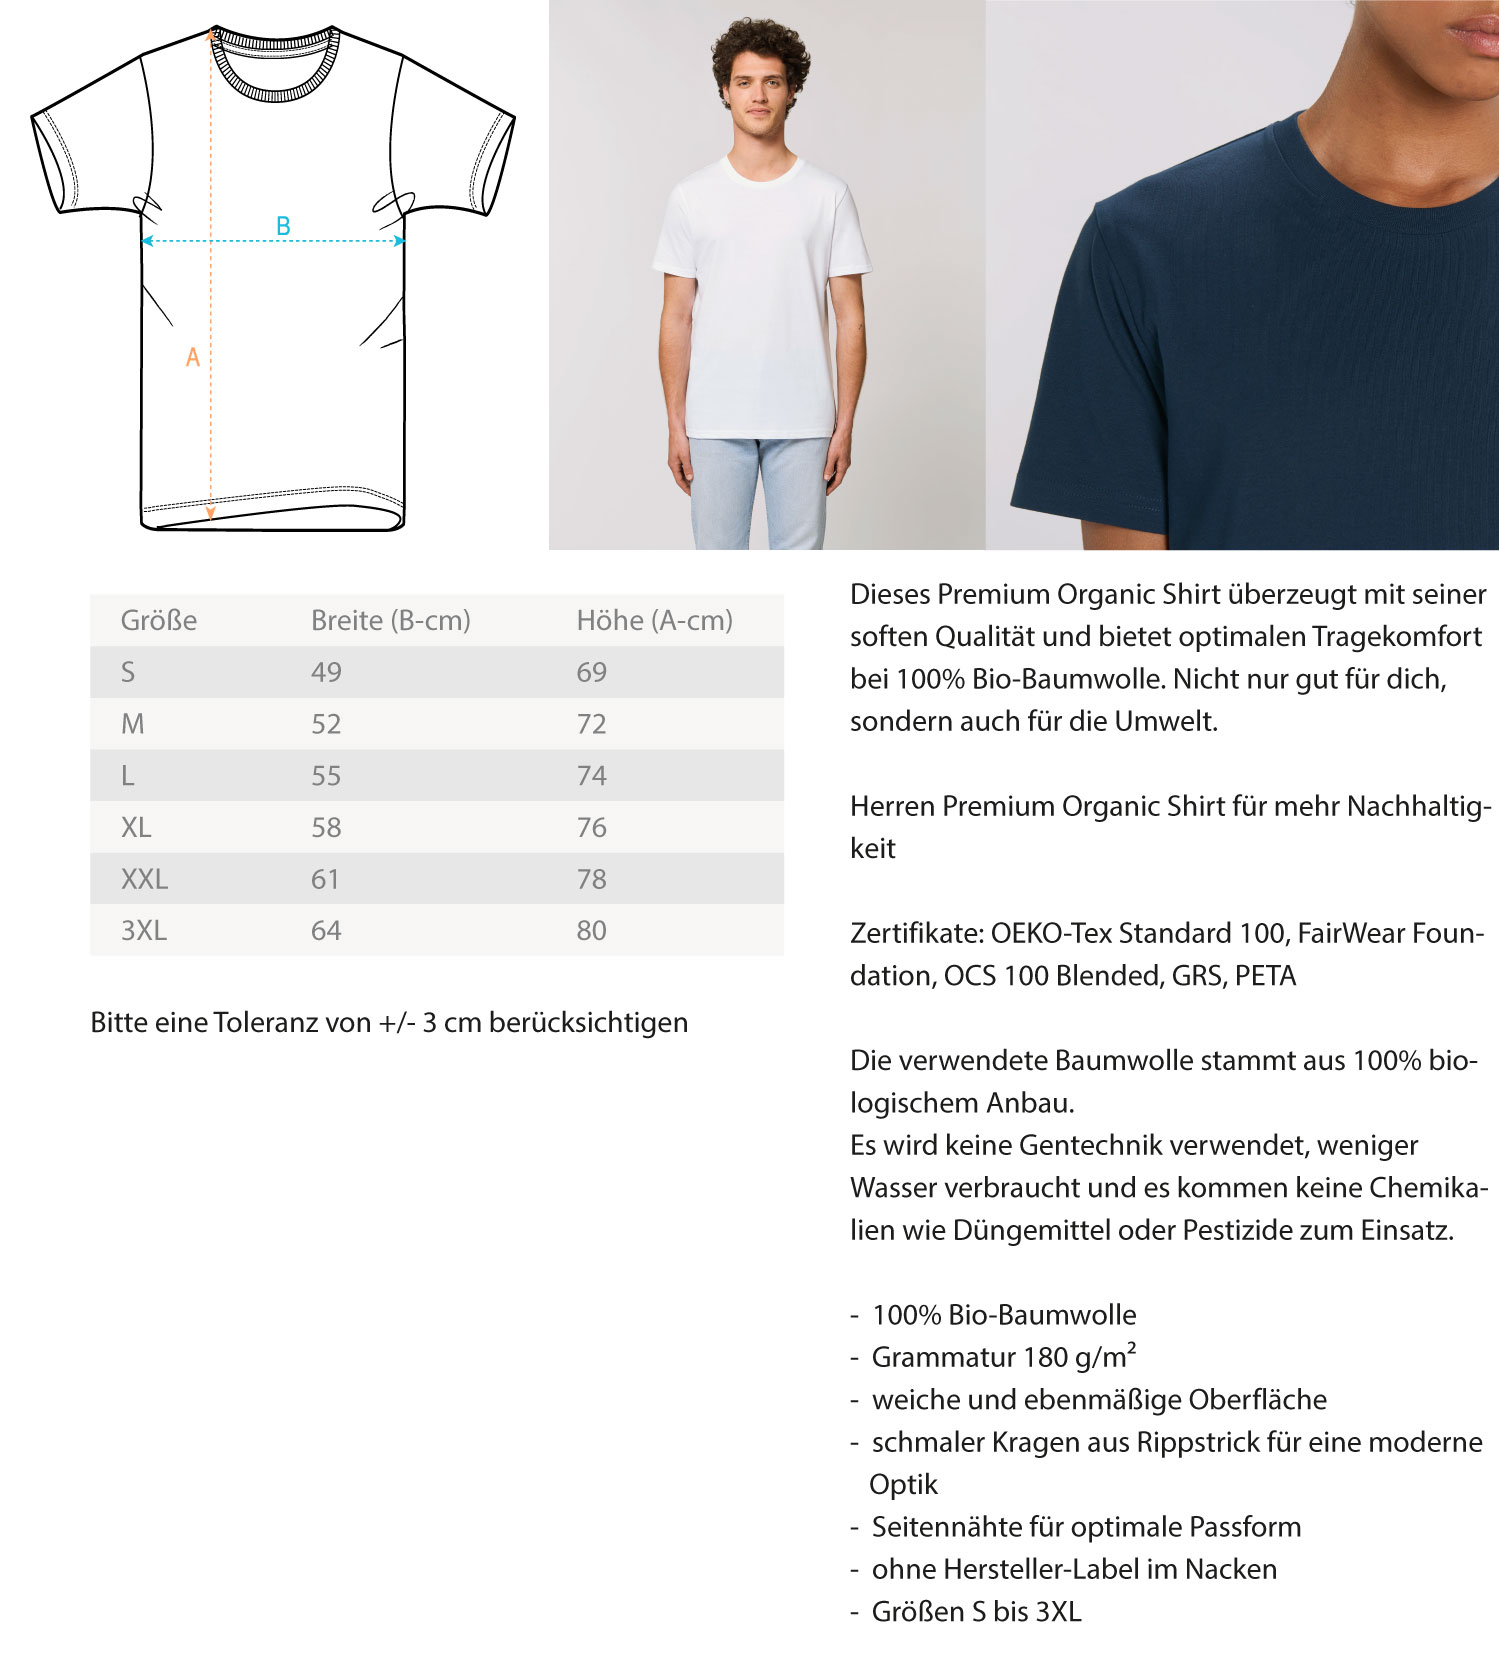 Dead End (Unisex/Herren Premium Organic Shirt ST/ST)